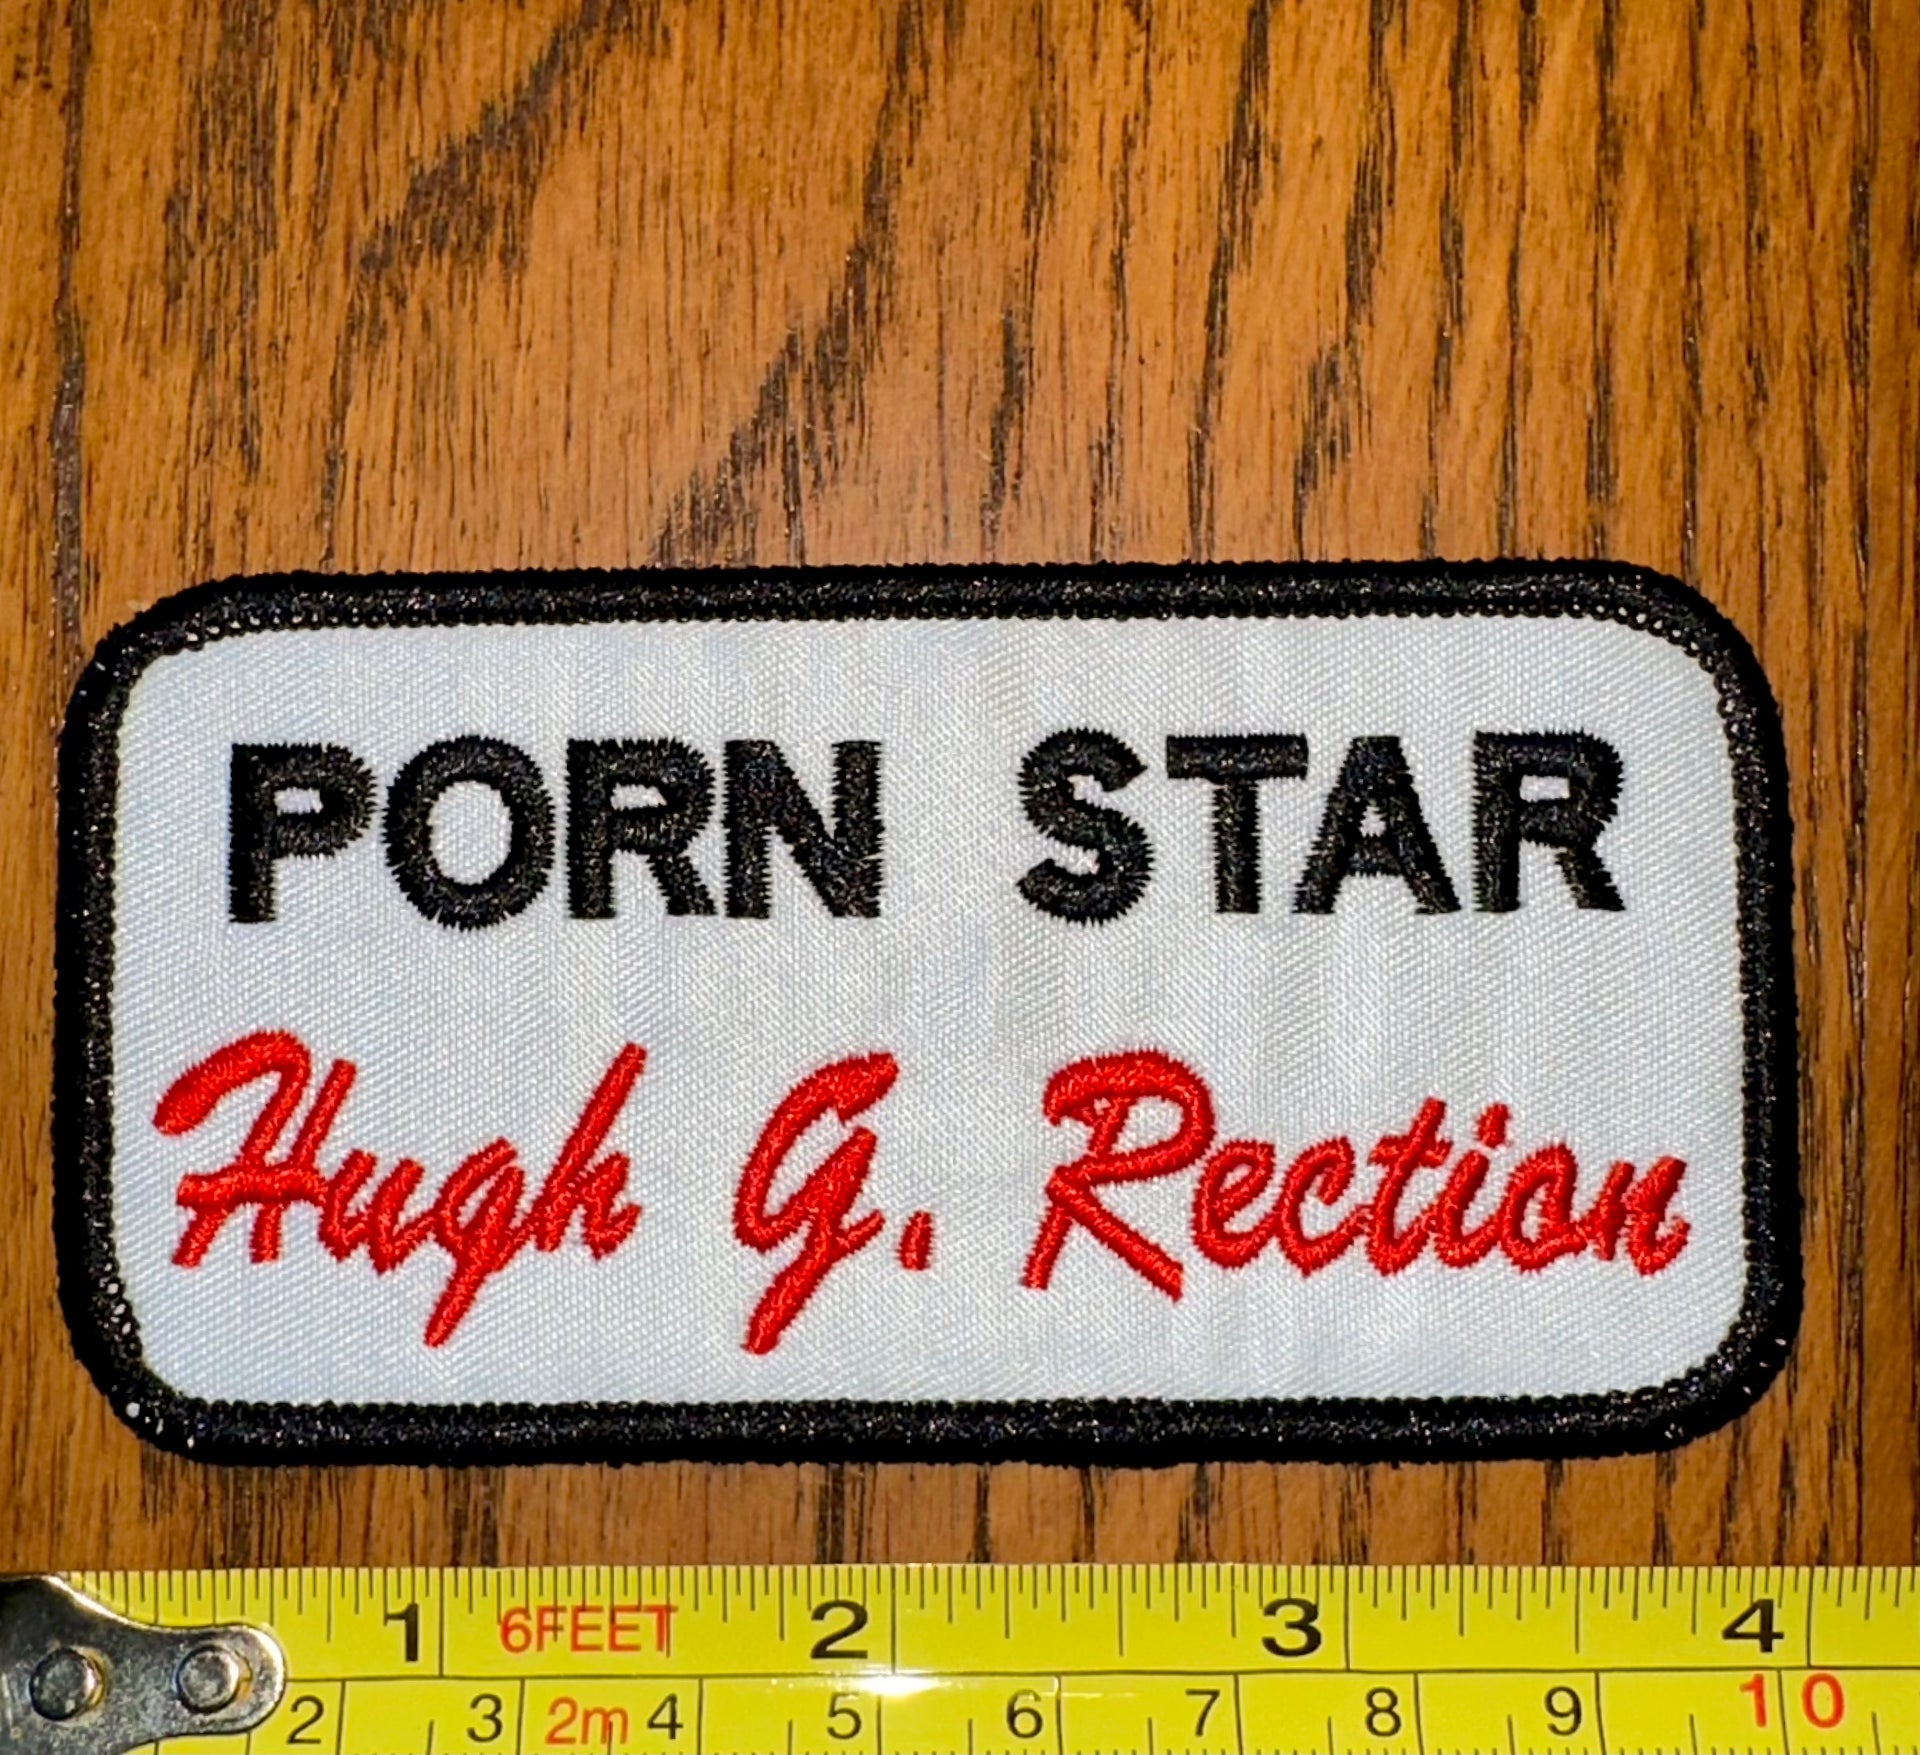 Porn Star 4 G - Porn Star Hugh G. Rection Patch â€“ Rusty Lids